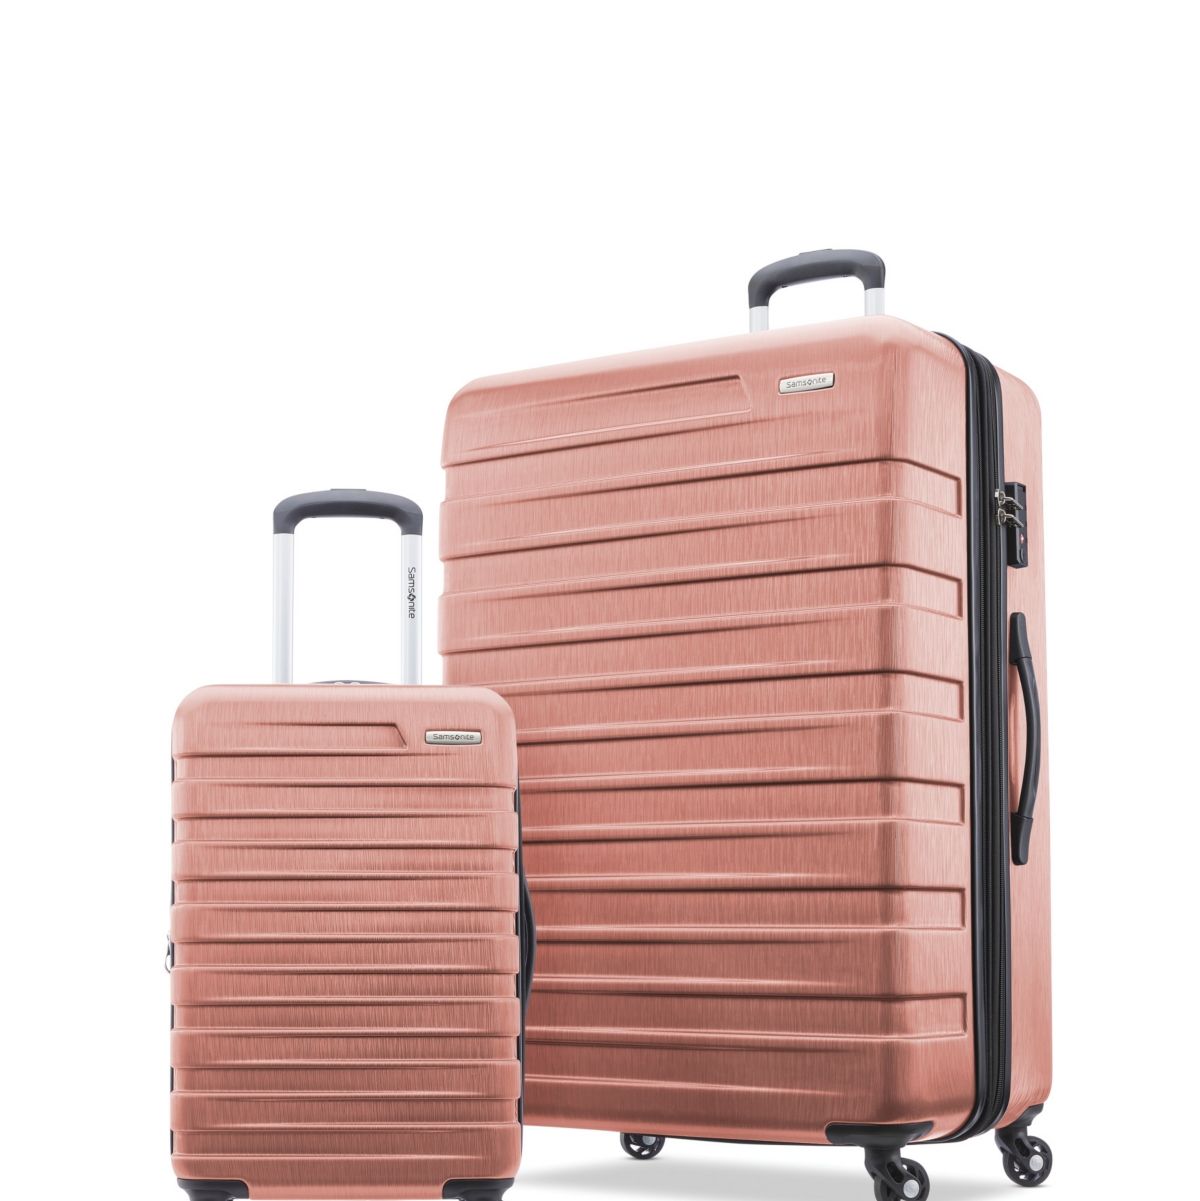 samsonite luggage sets